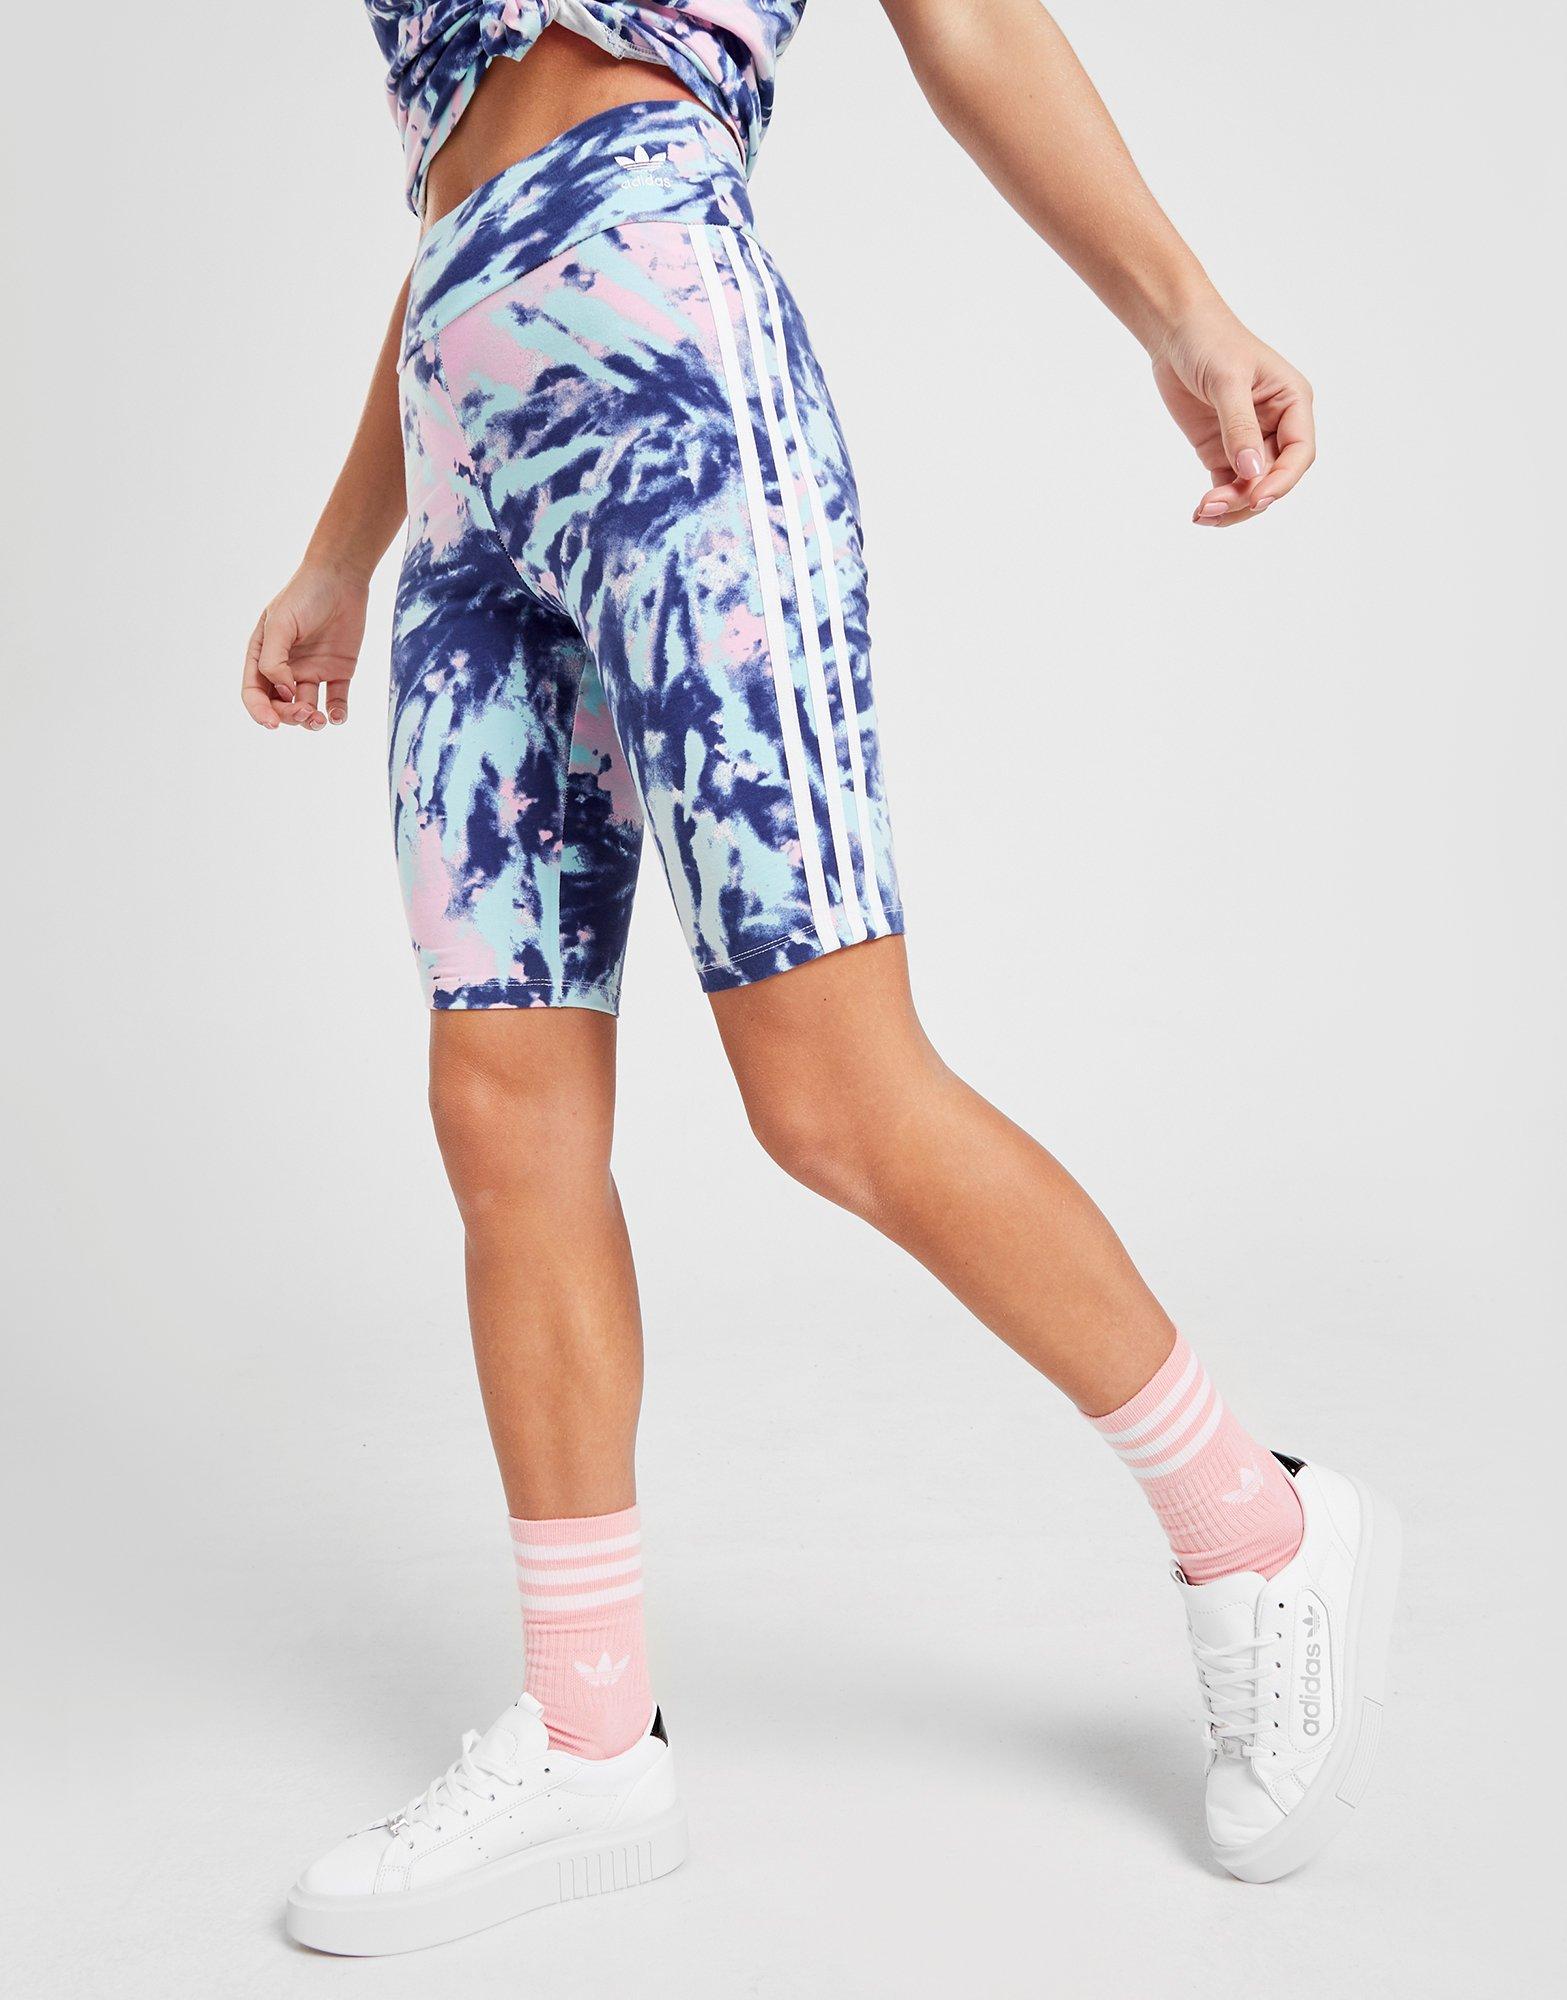 Adidas Tie Dye Shorts Flash Sales, 55% OFF | lagence.tv